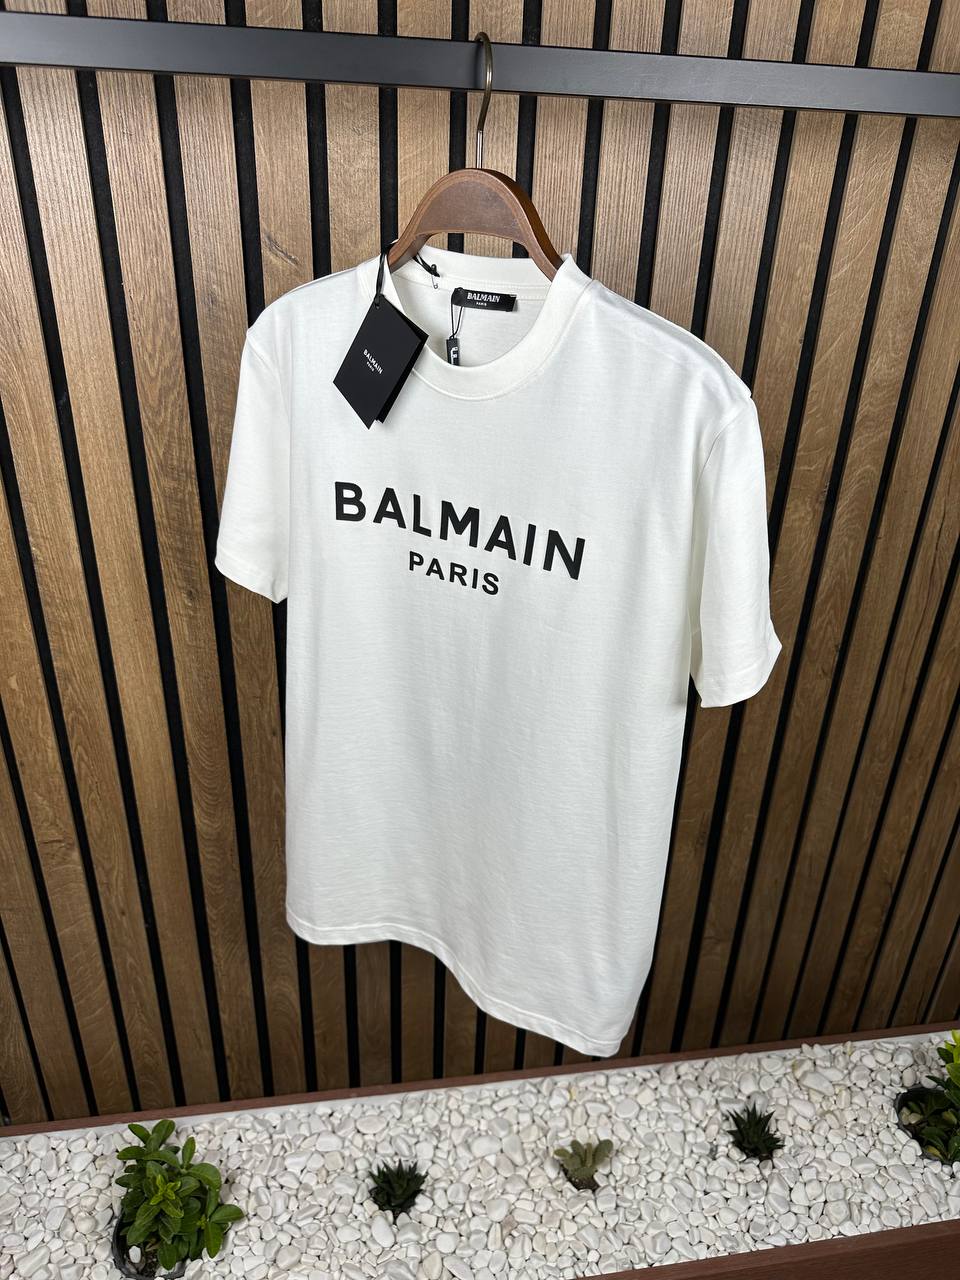 Balmain Paris Rubber Logo White Tshirt For Men